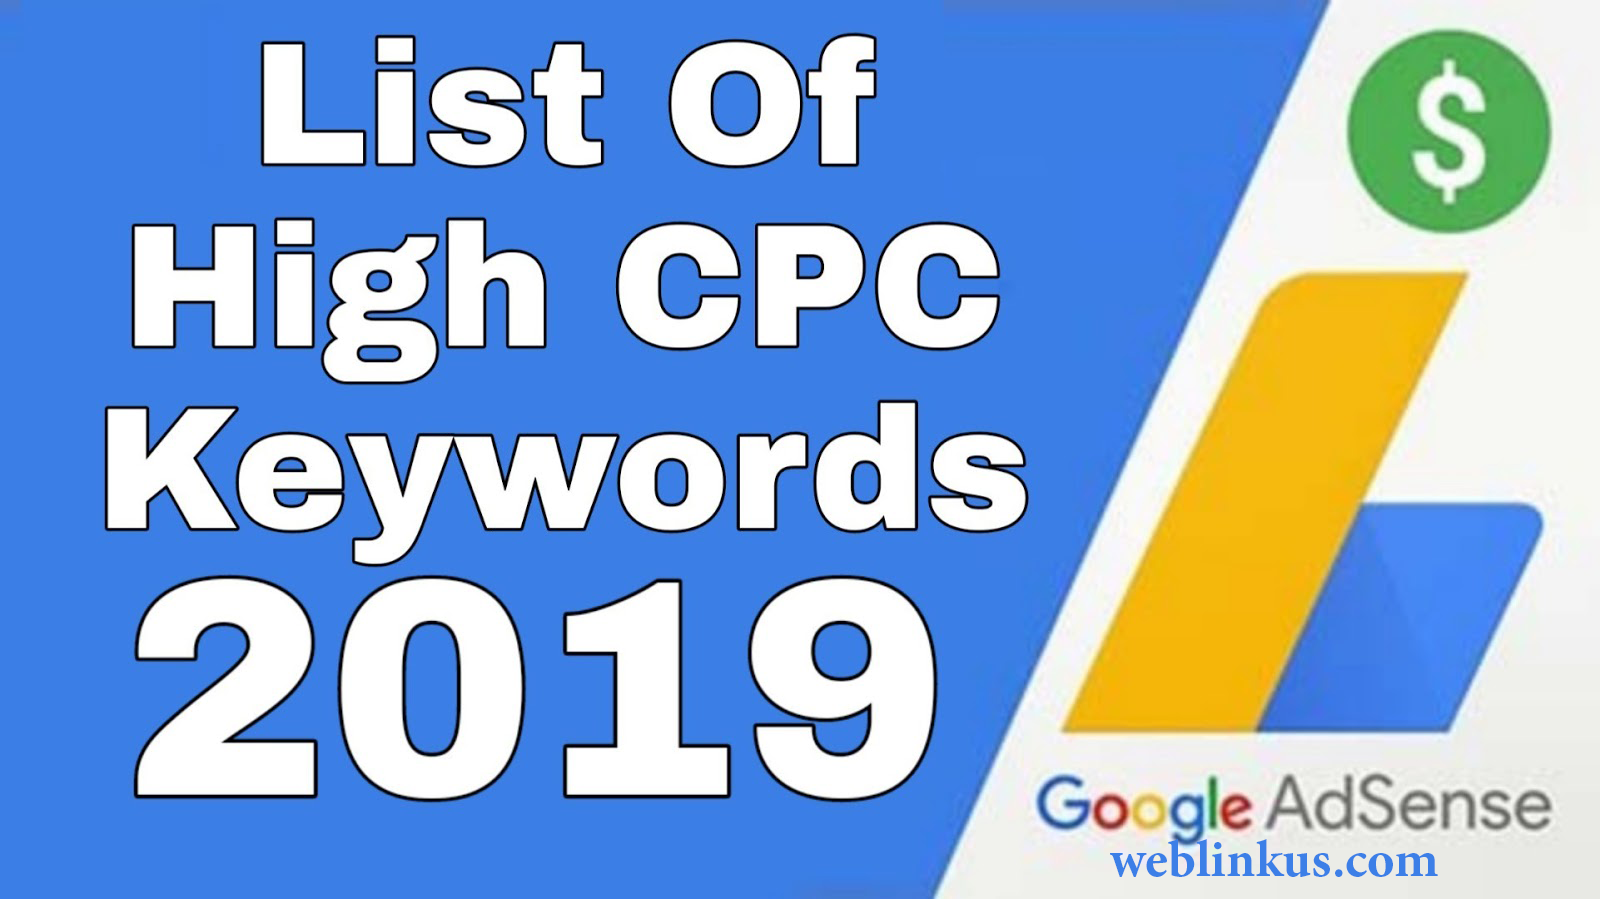 The highest CPC keywords